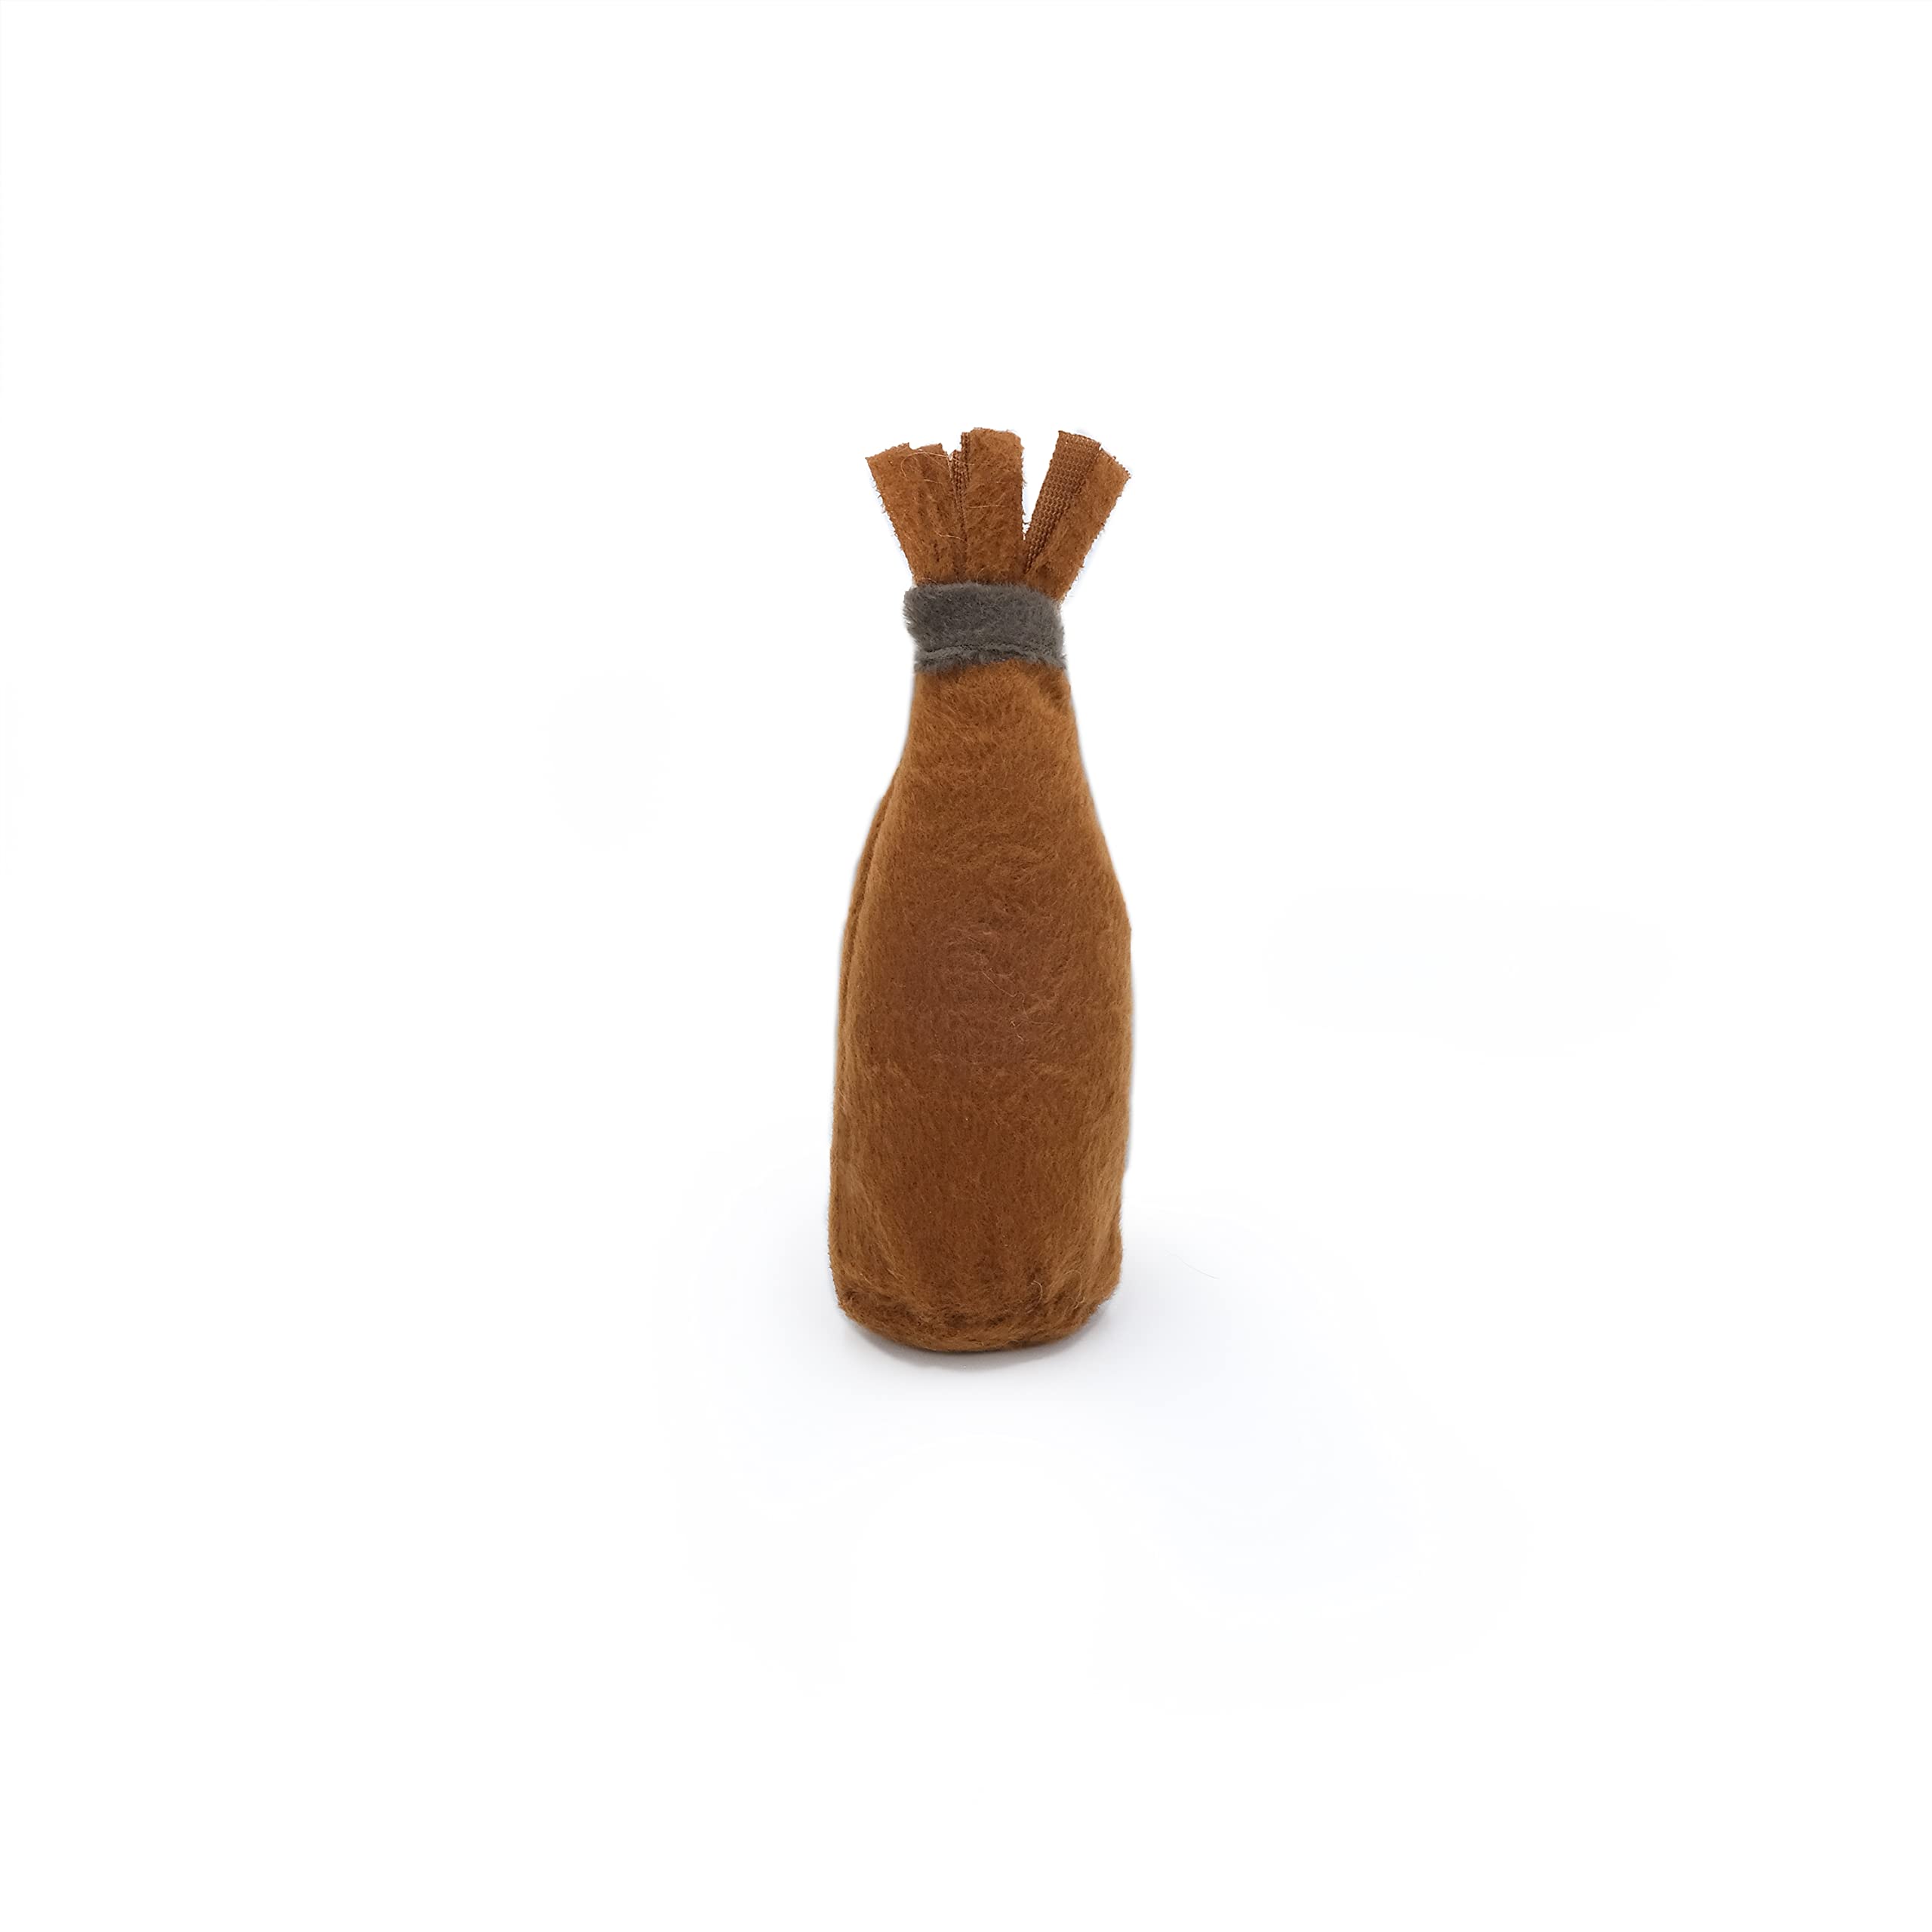 Zippy Paws Catnip Whisky Bottle Plush Catnip Cat Toy - Small  